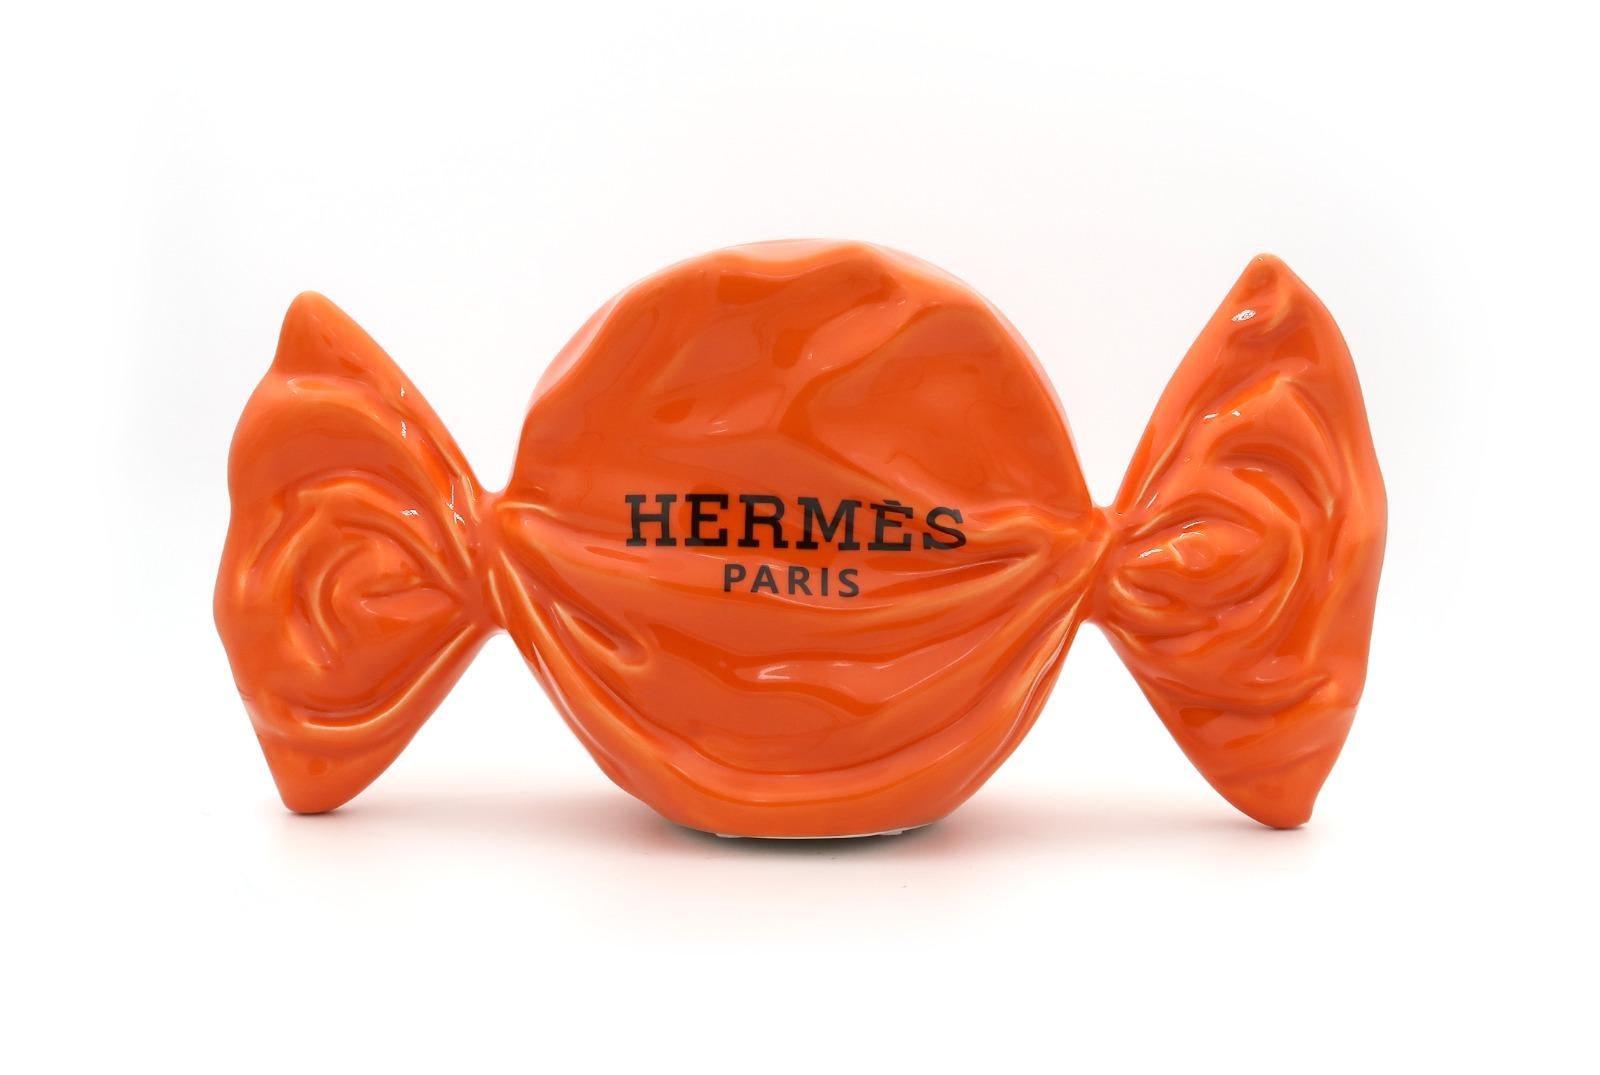  Hermes Tribute Candy - Pop Art Sculpture by julie jaler